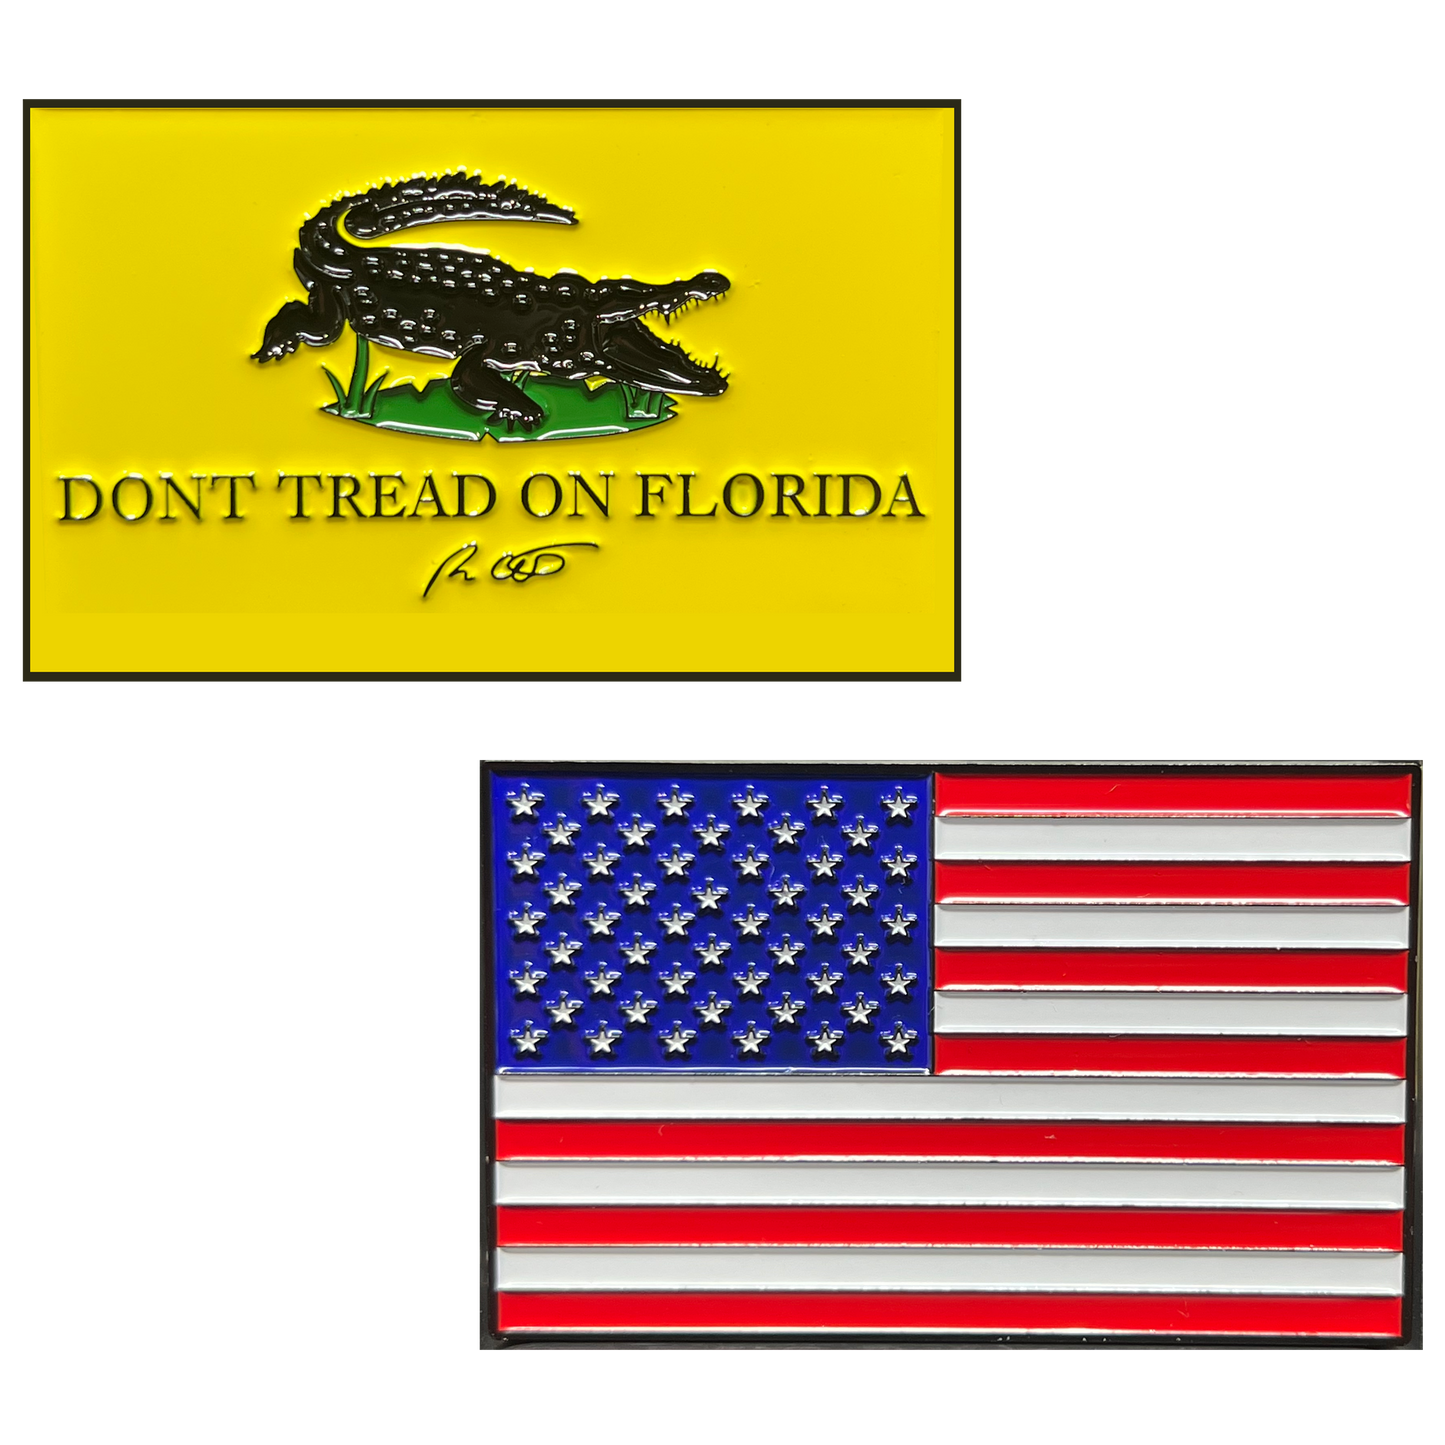 GL1-003 Florida Governor Ron DeSantis inspired Don't Tread on Florida 2nd Amendment Flag Challenge Coin